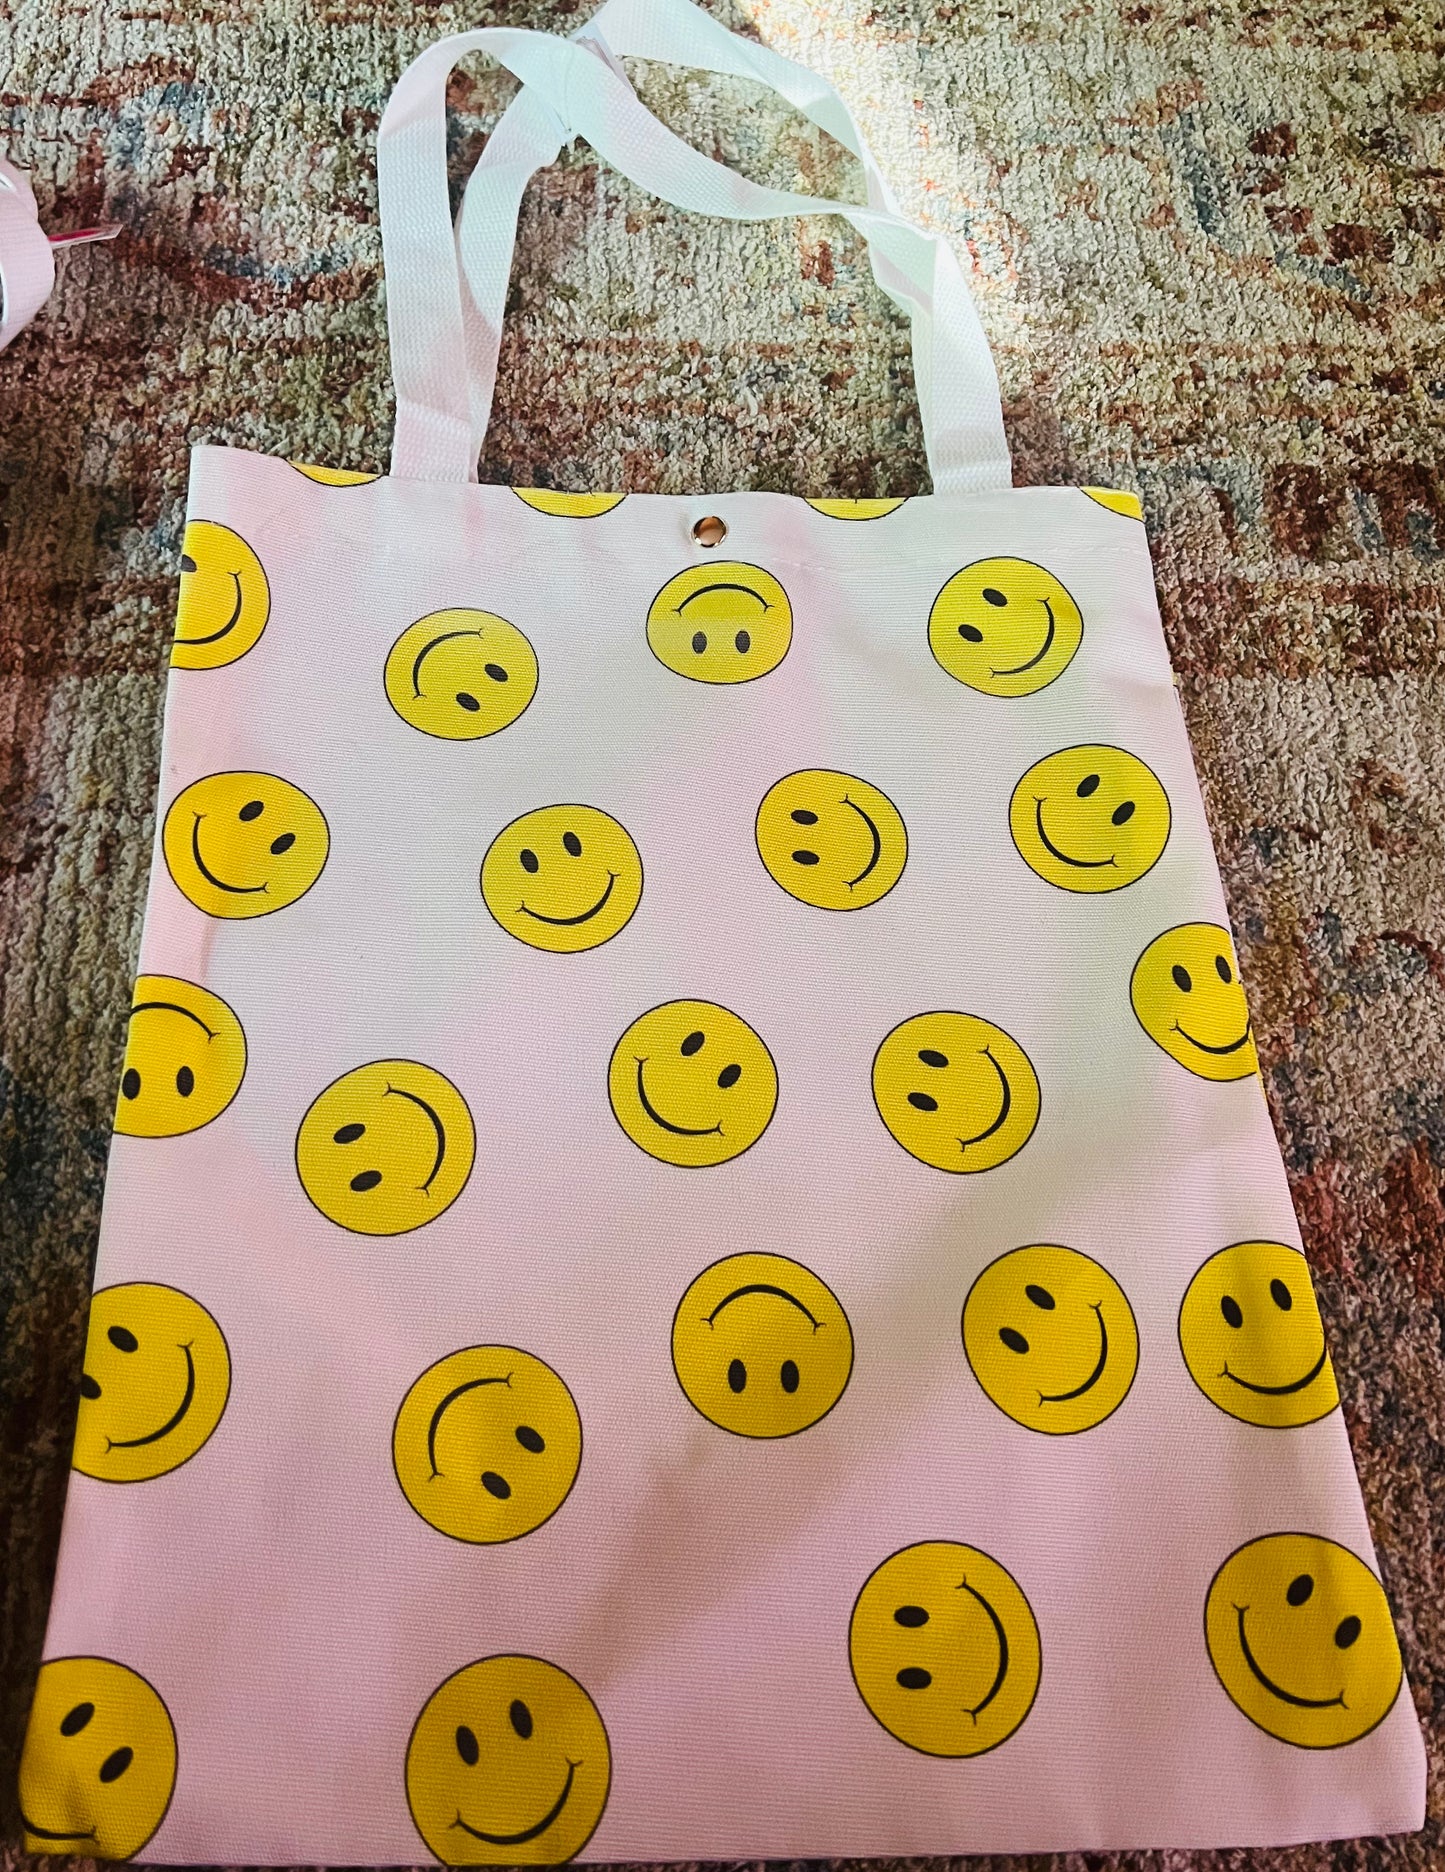 Be Happy tote bag